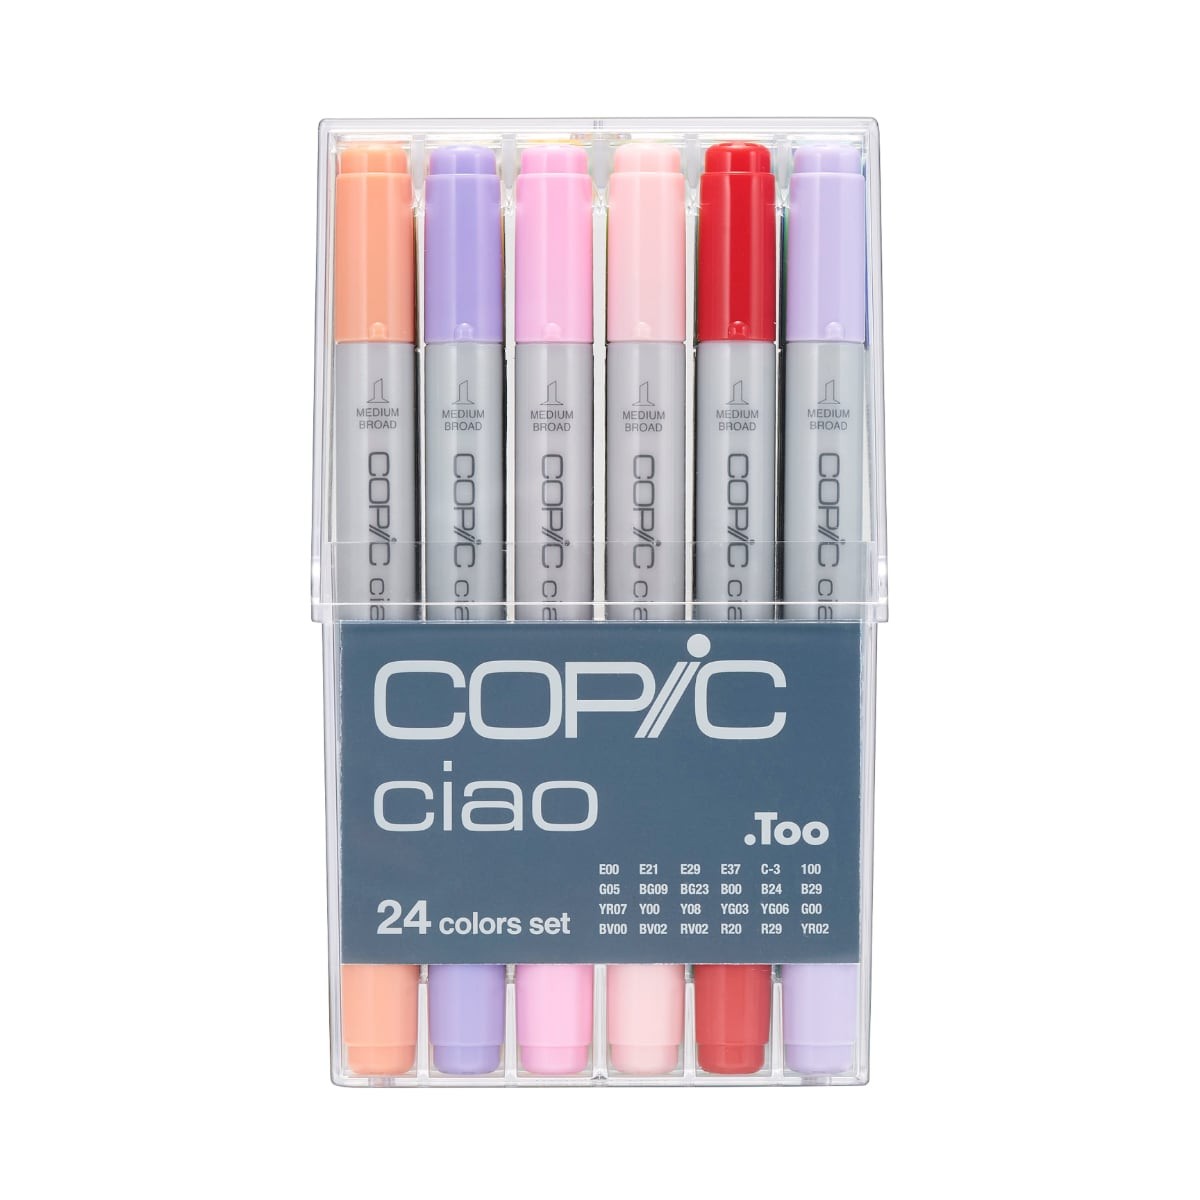 Copic Ciao 24 colors set